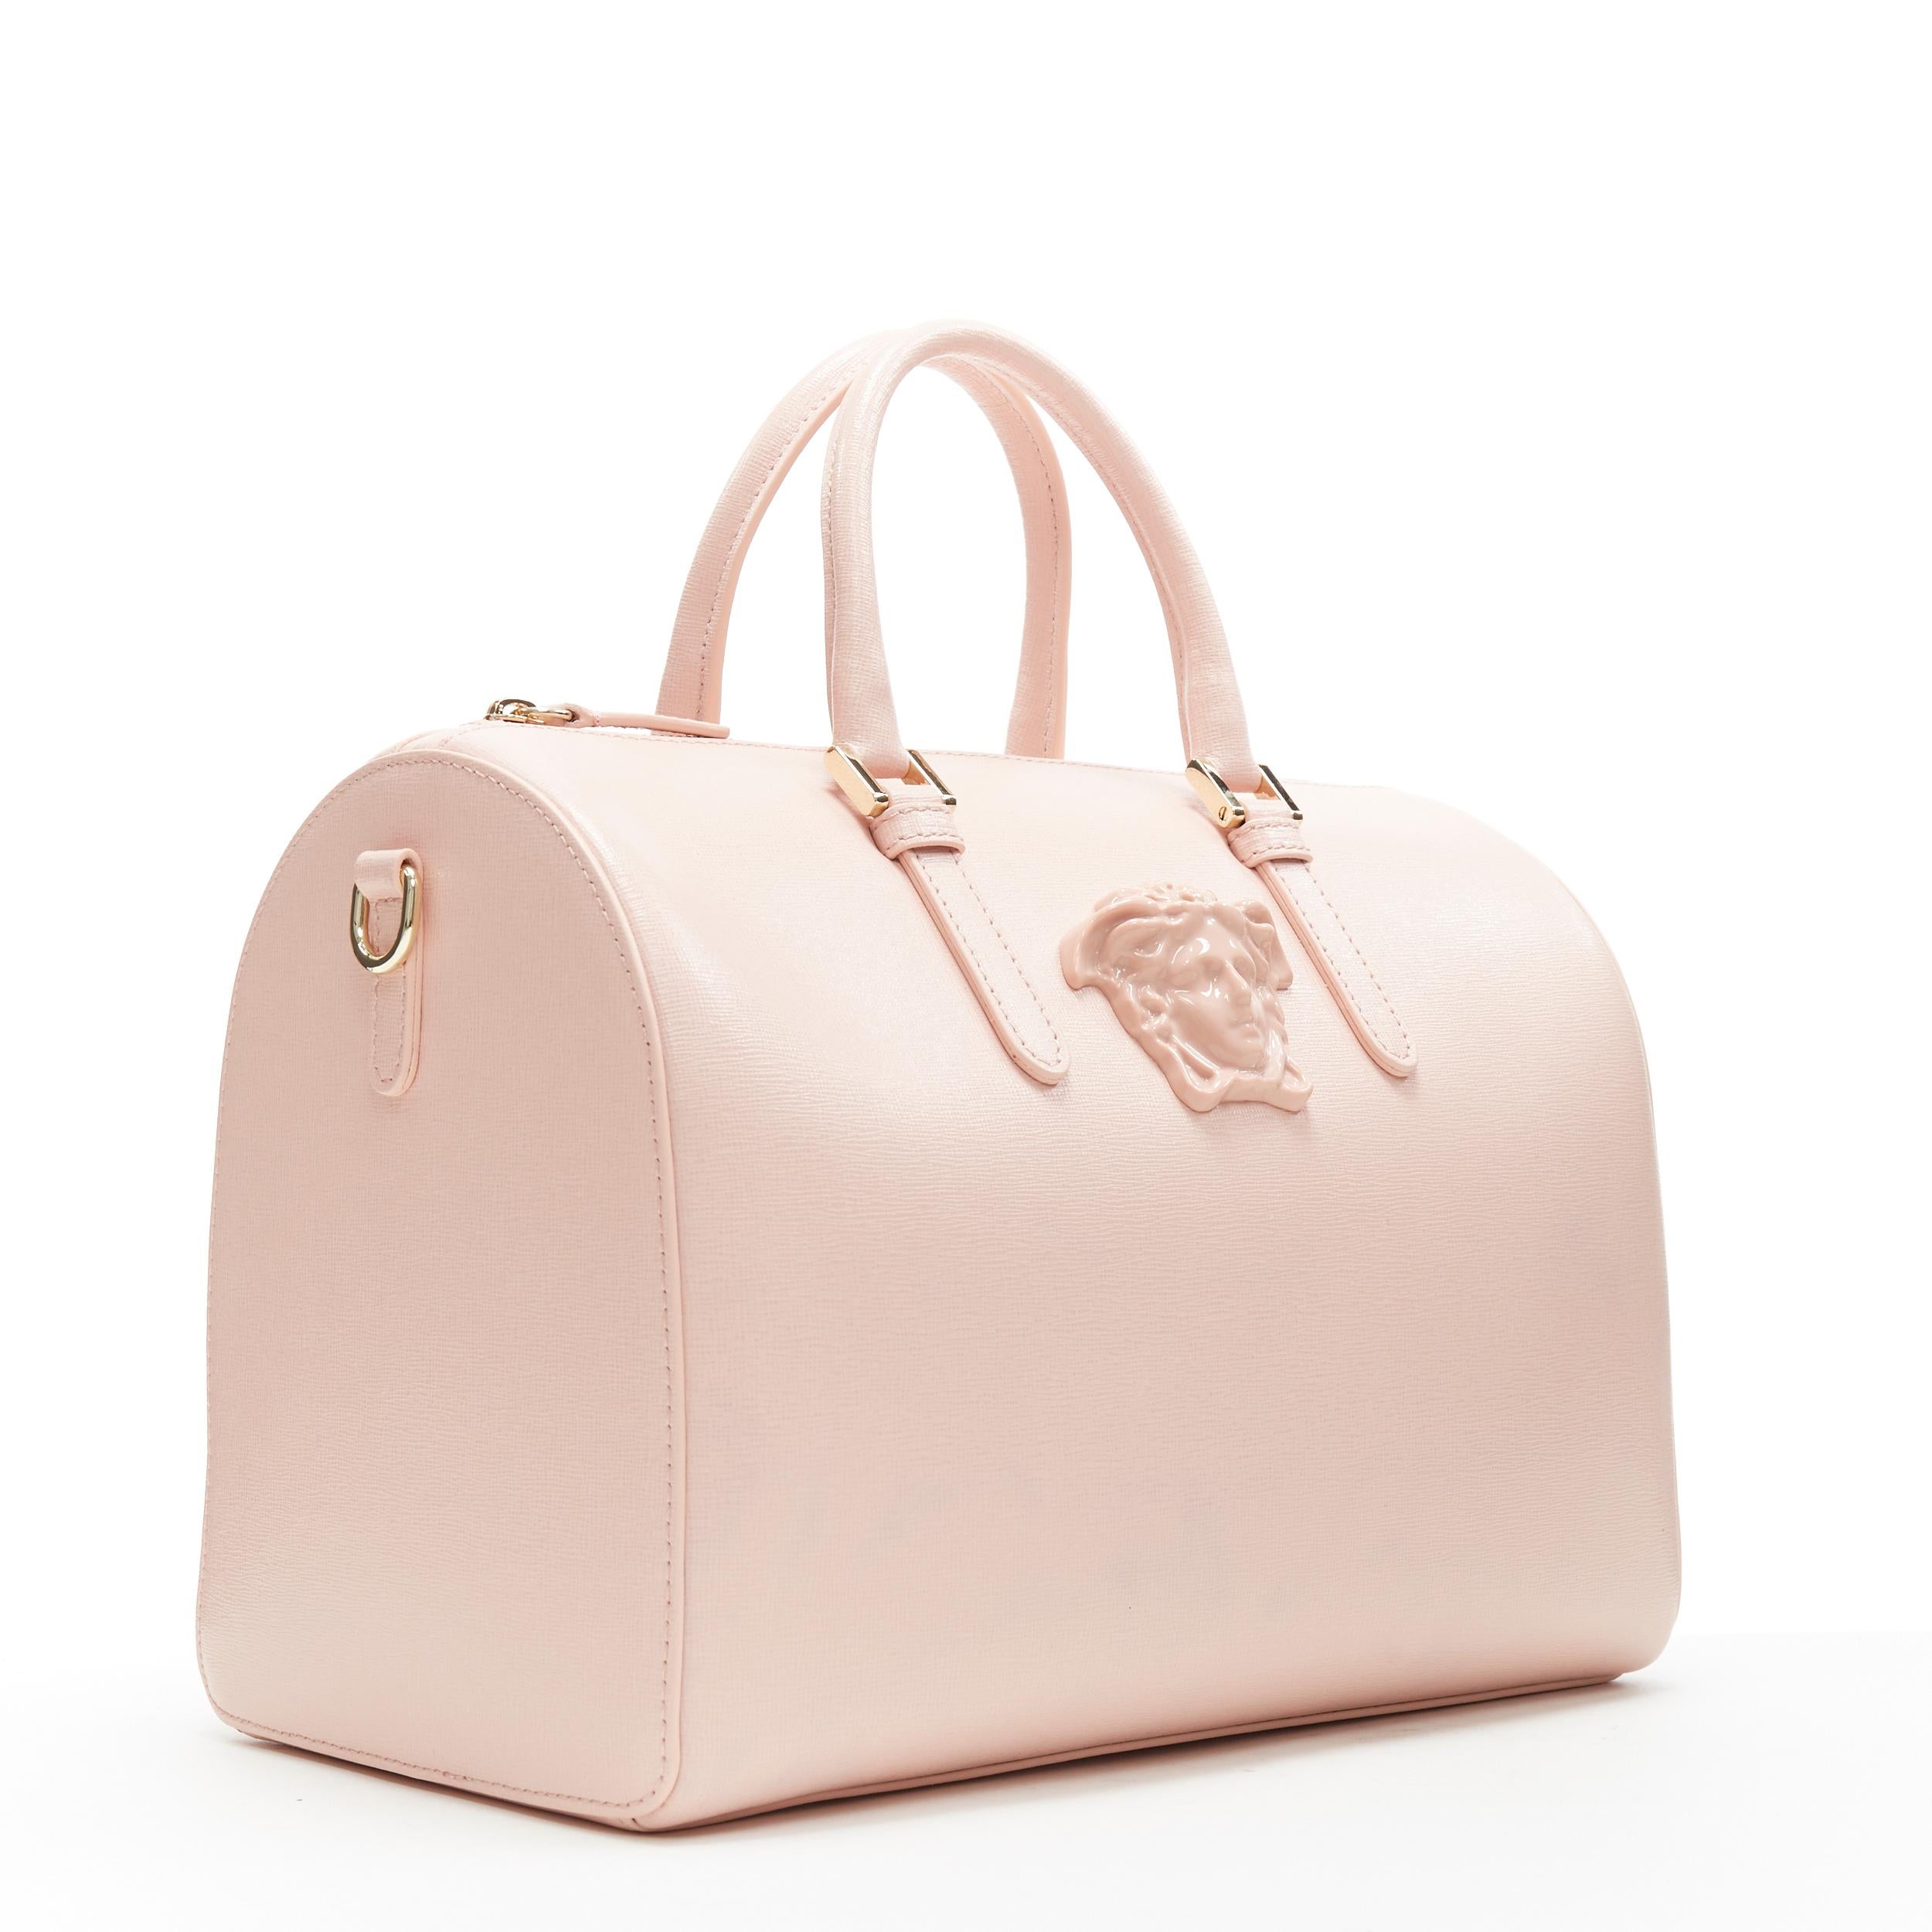 White new VERSACE Palazzo Medusa pink saffiano leather large speedy boston cross bag